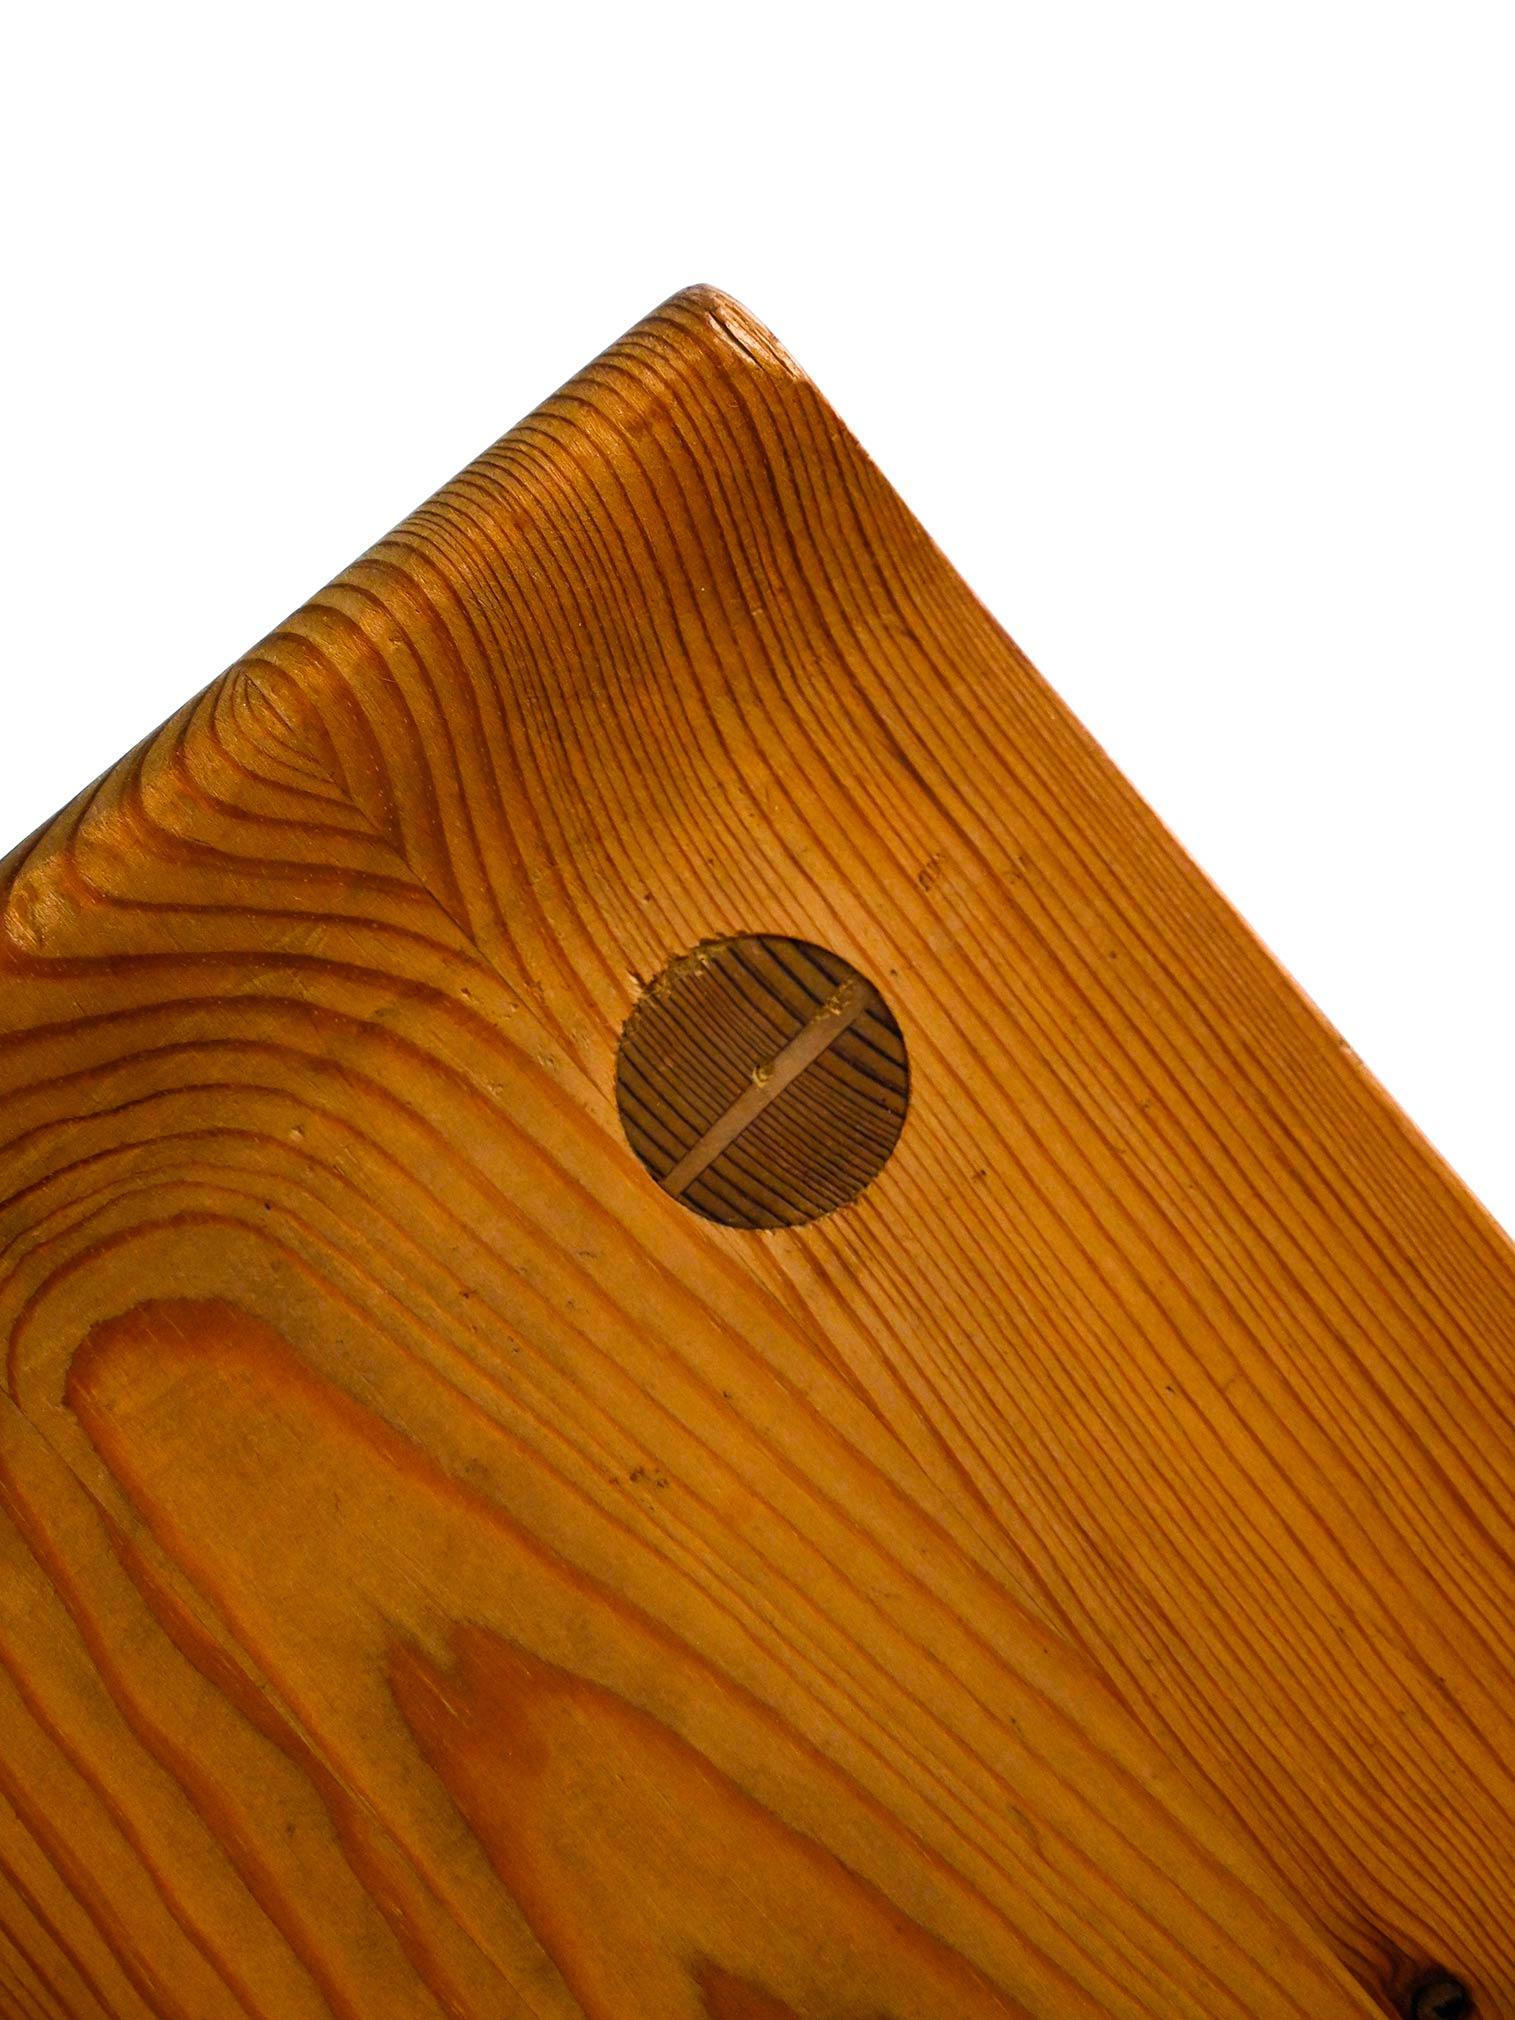 Swedish Wooden stool attrib. to Carl Malmsten